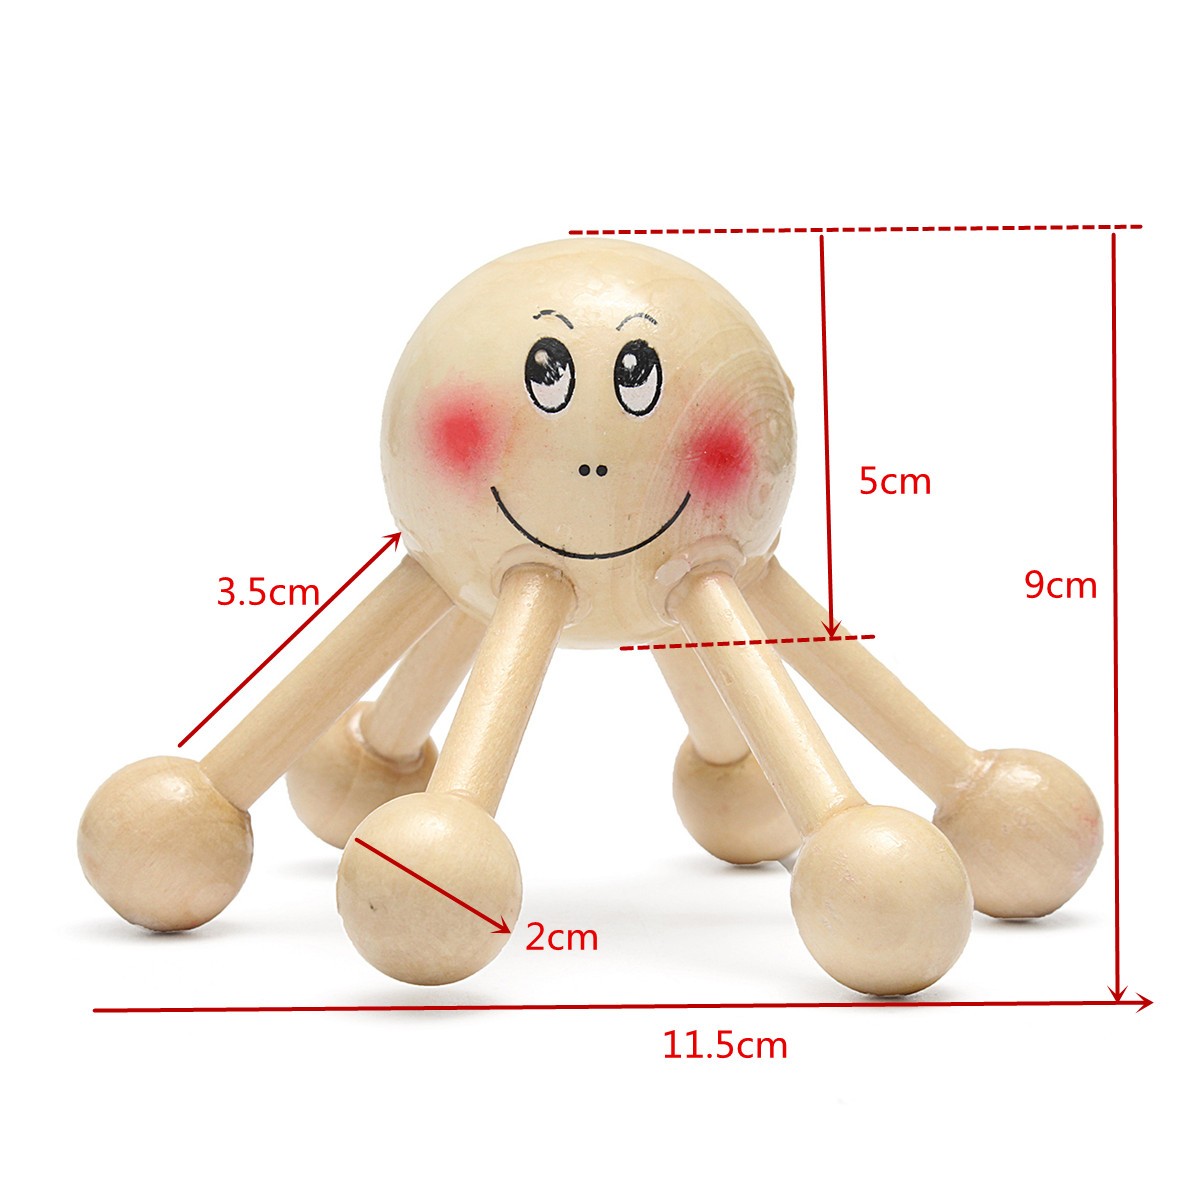 Durable-Cute-Wooden-6-Ball-Legs-Massager-Neck-Back-Full-Body-Shoulder-Roller-Stress-Relief-1241950